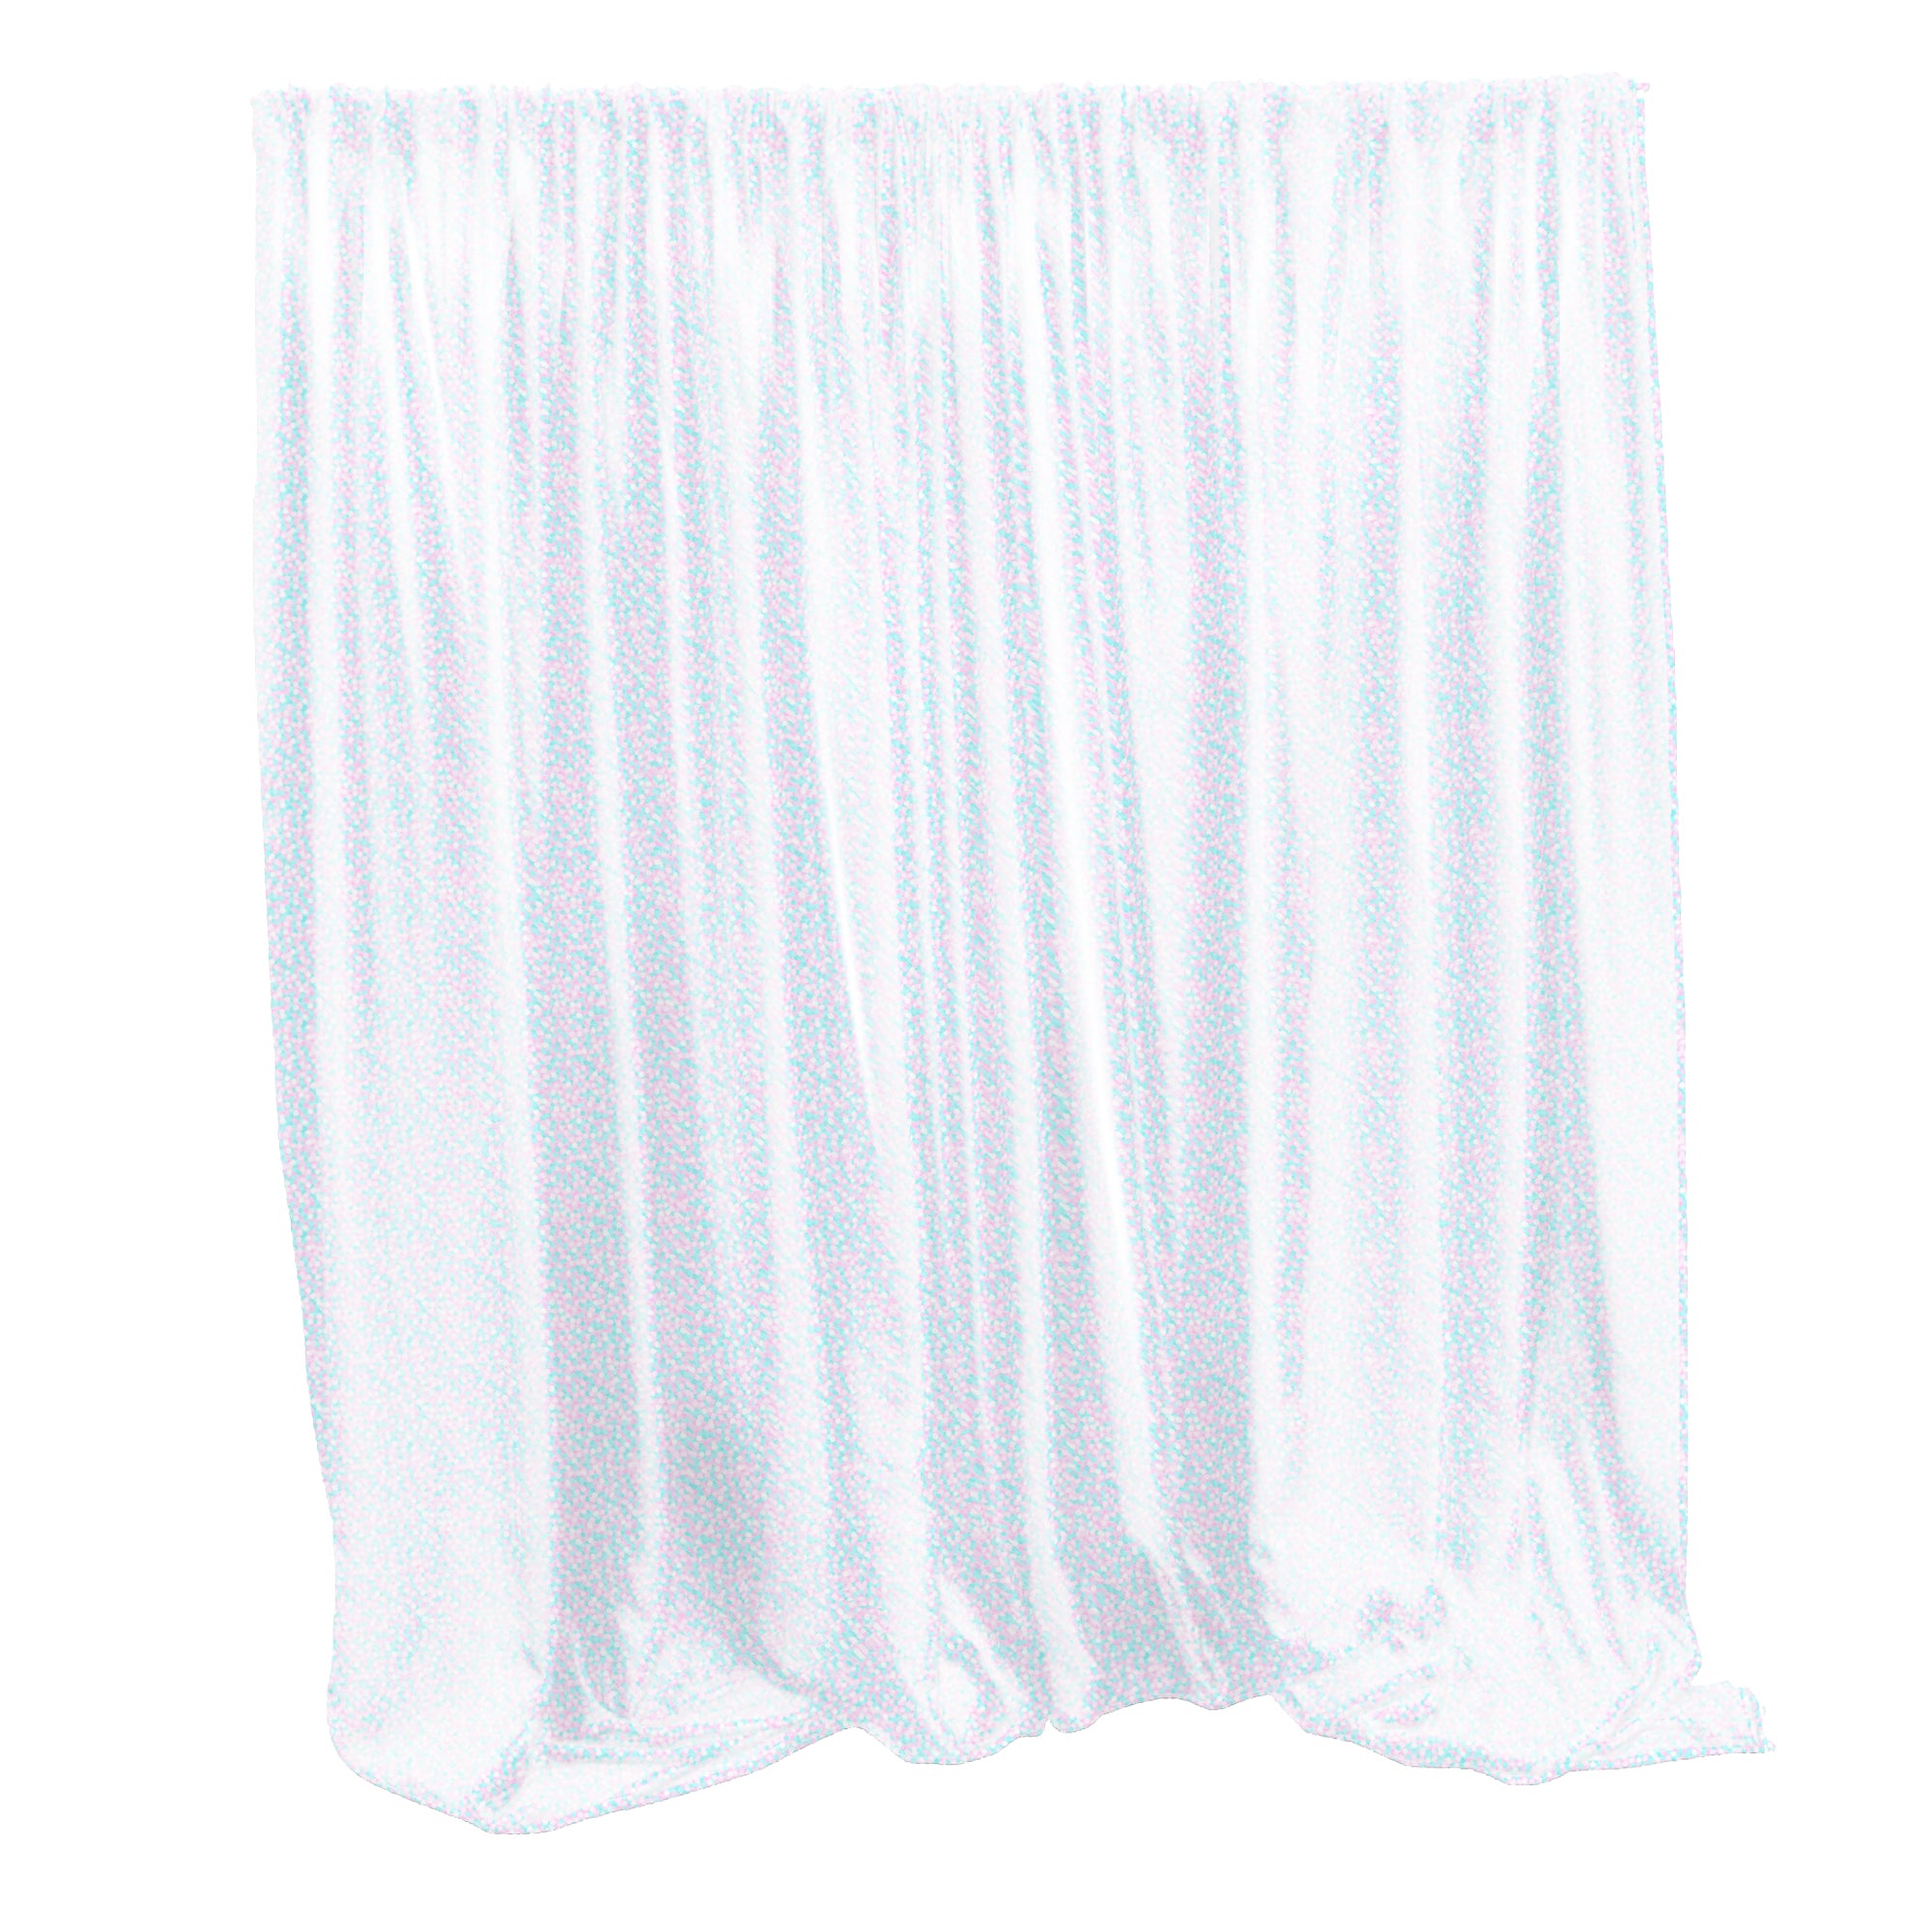 Sequin Backdrop | White Iridescent